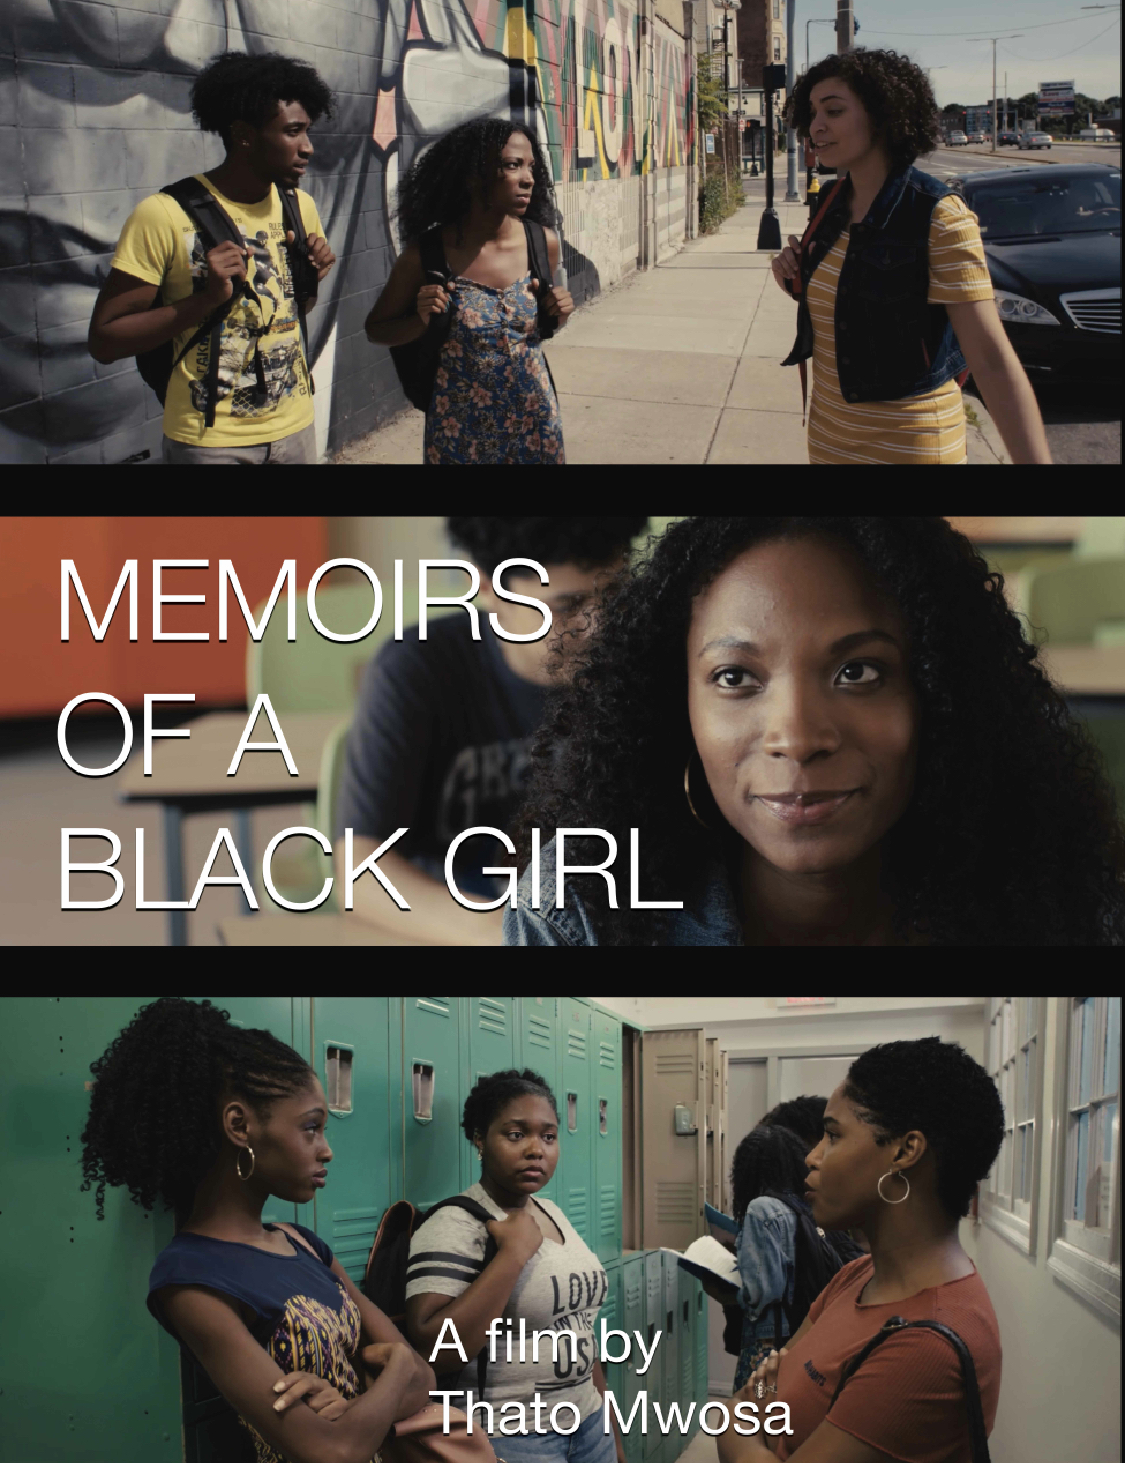 Memoirs of a black girl